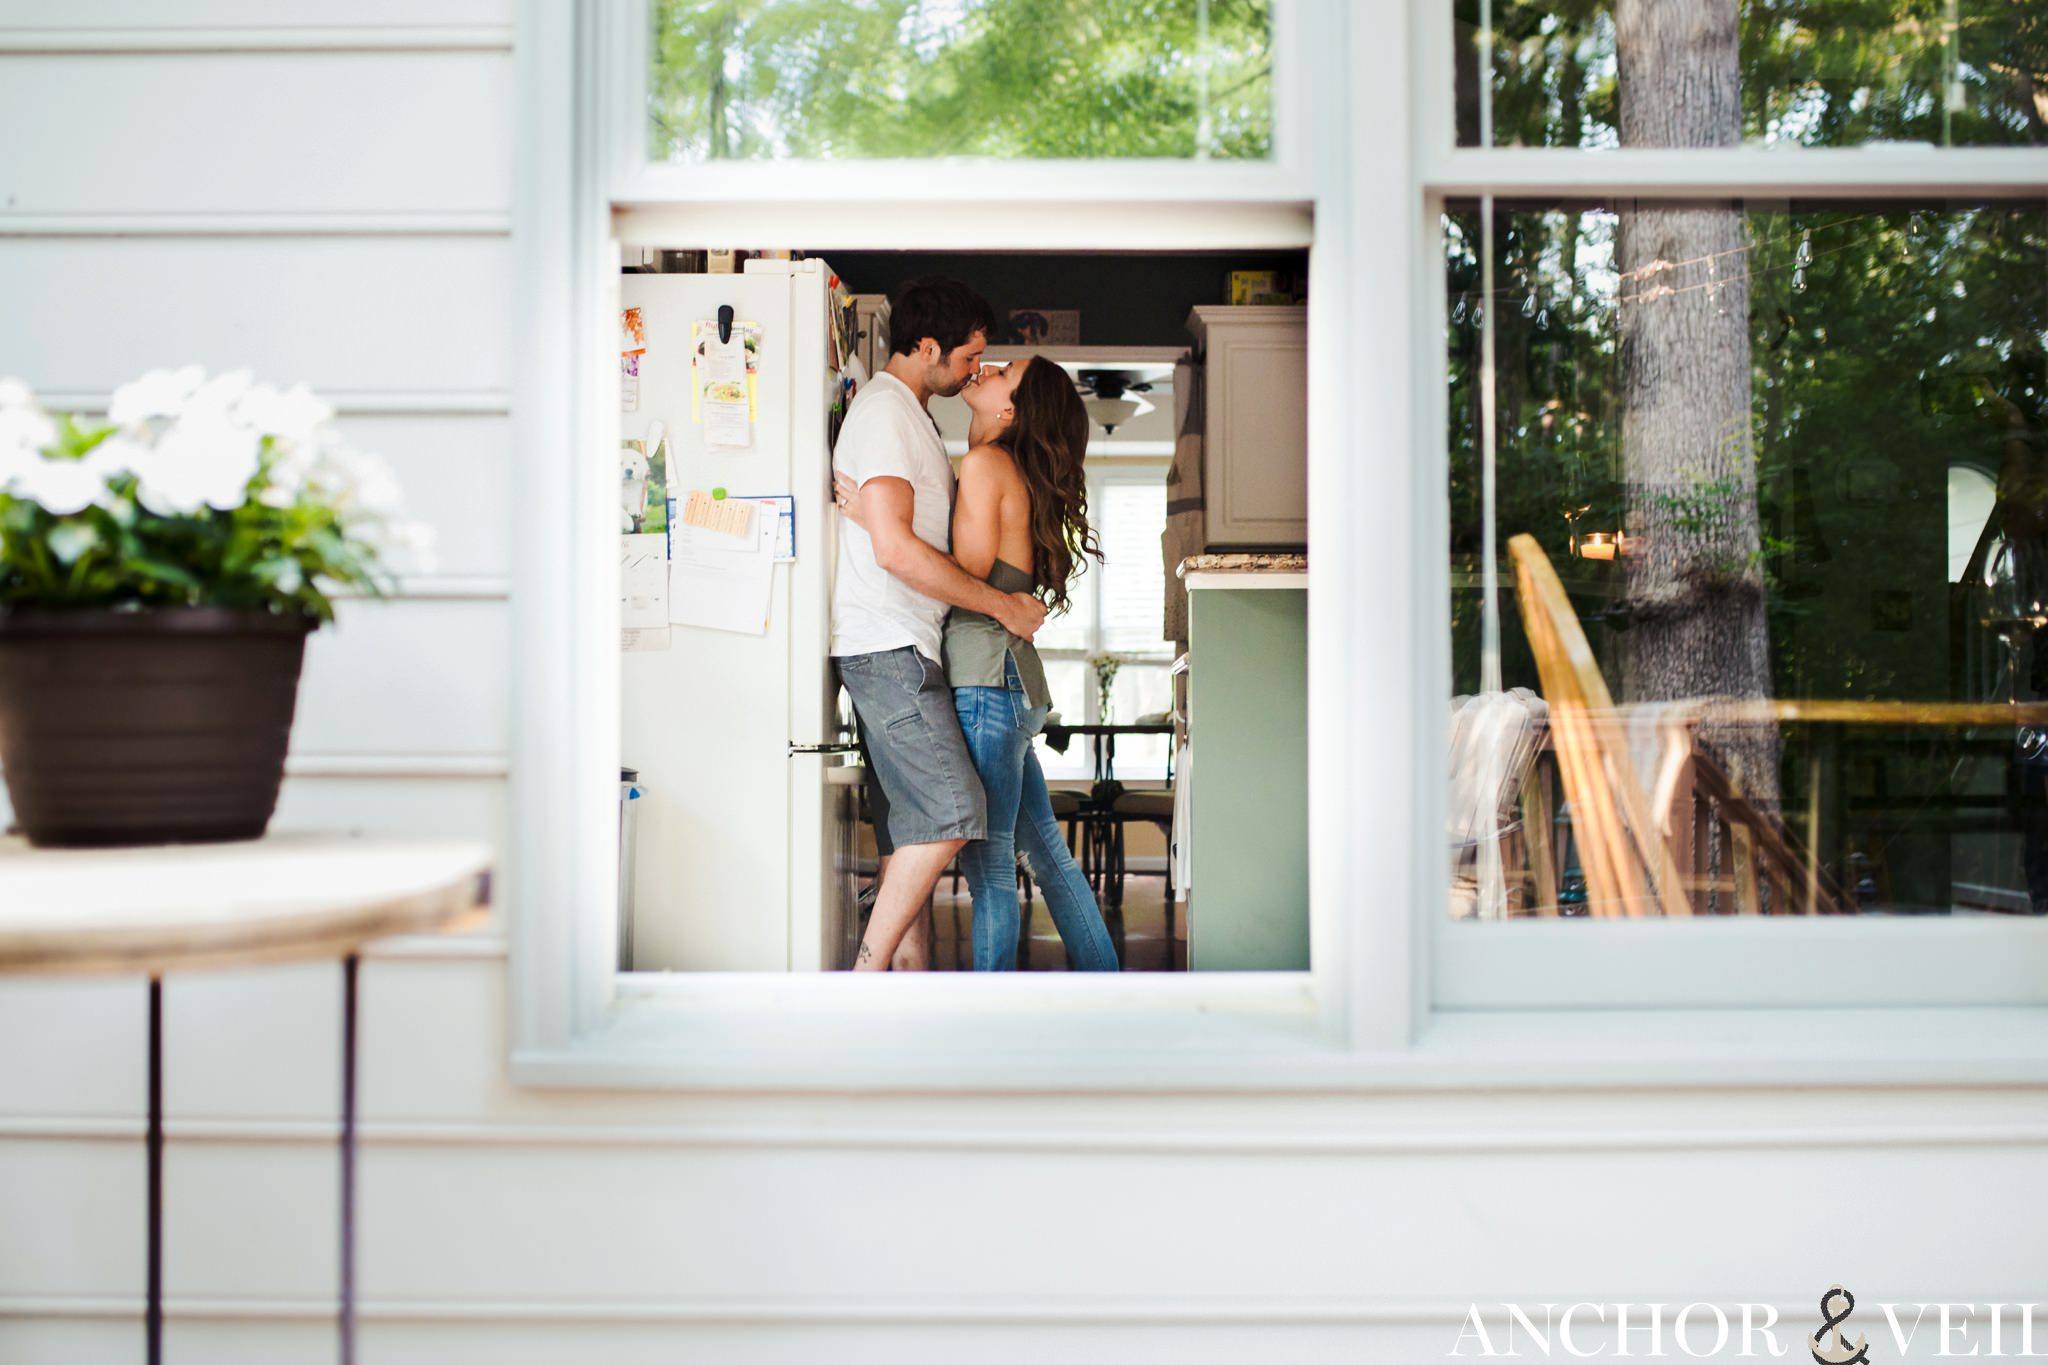 through the window kissing against the fridge